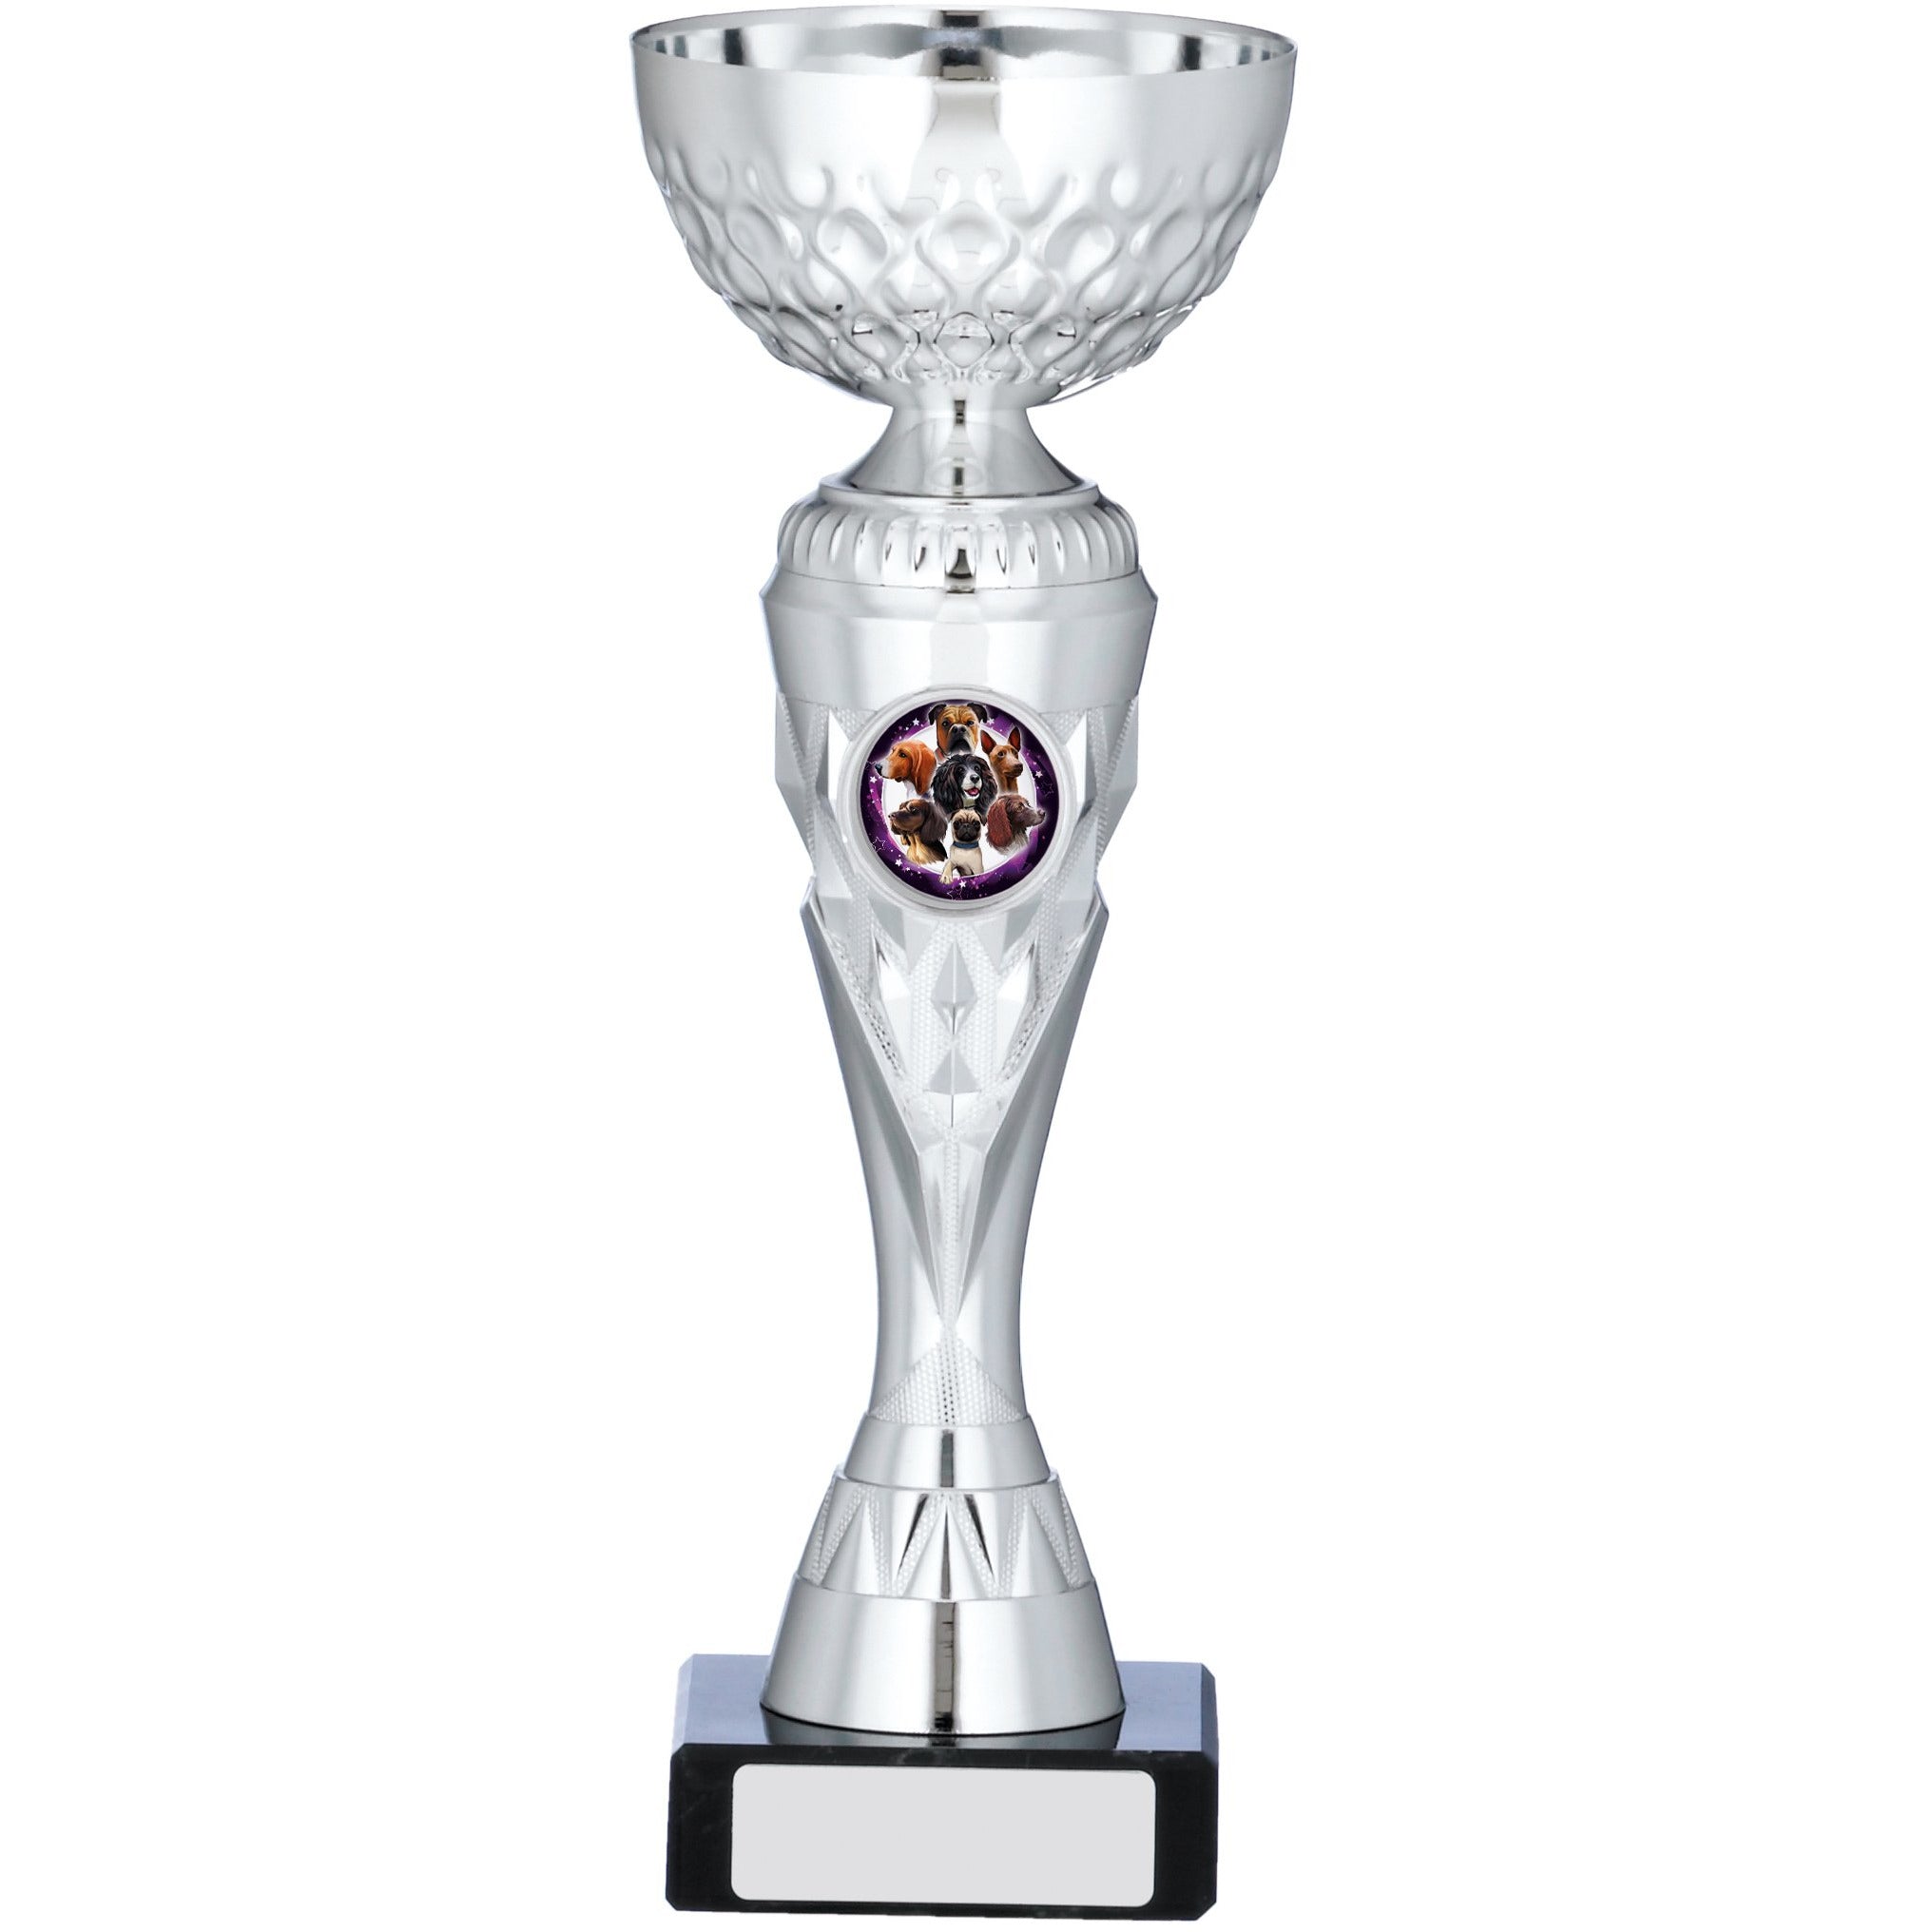 Slender Silver Trophy Cup